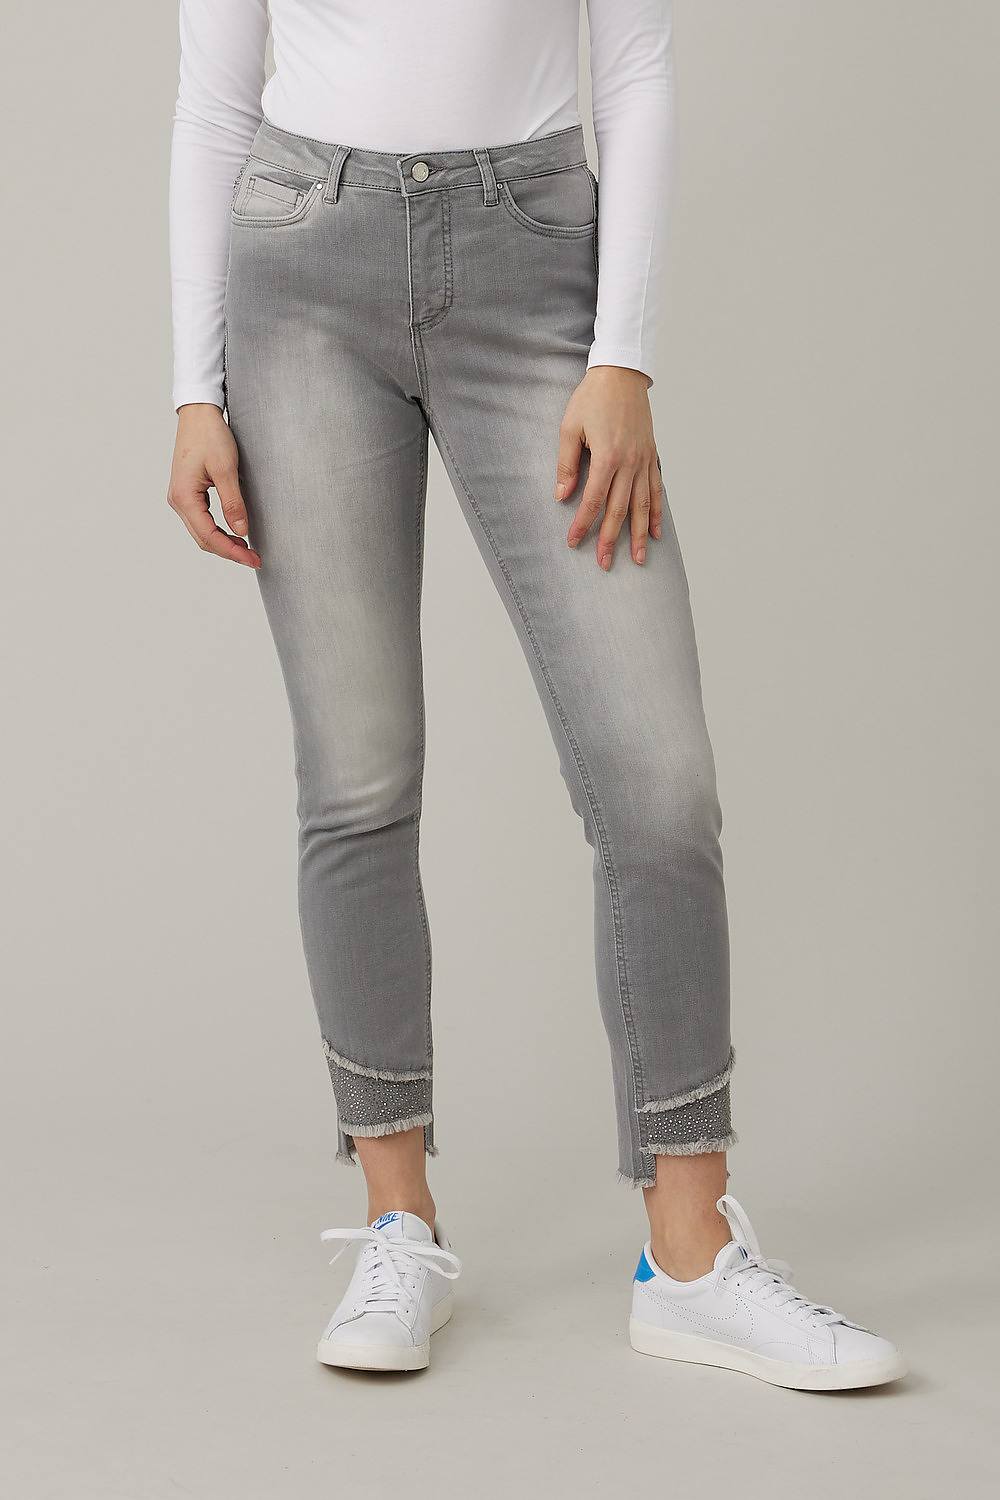 Joseph Ribkoff Embellished Jeans Style 221944. Light Grey